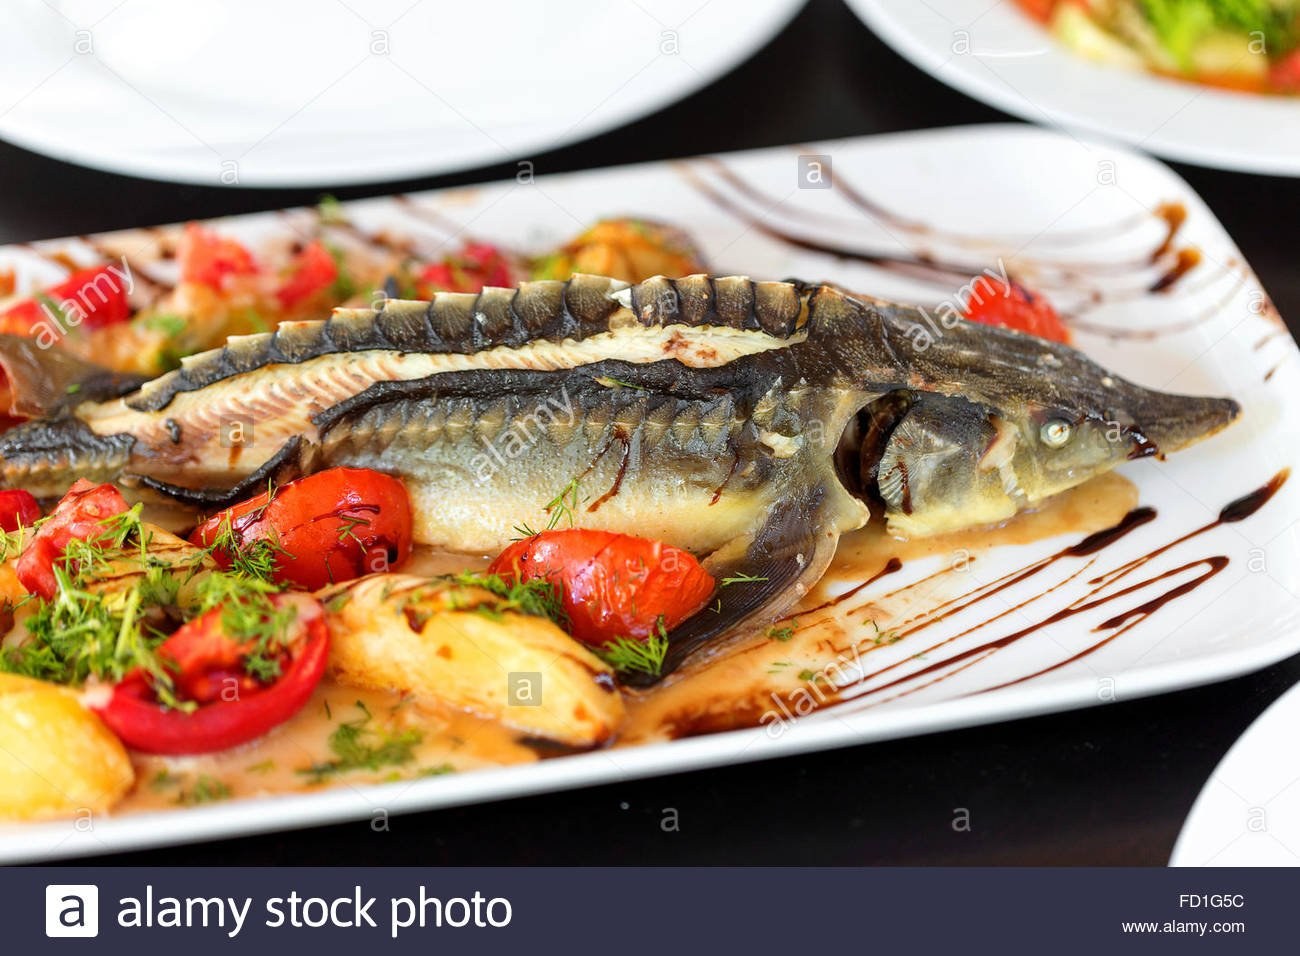 Блюда из рыбы в столовой. Стерлядь Царская рыба. Осетр Лаванги. Рыба фаршированная (Судак, щука). Осетрина Царская рыба.